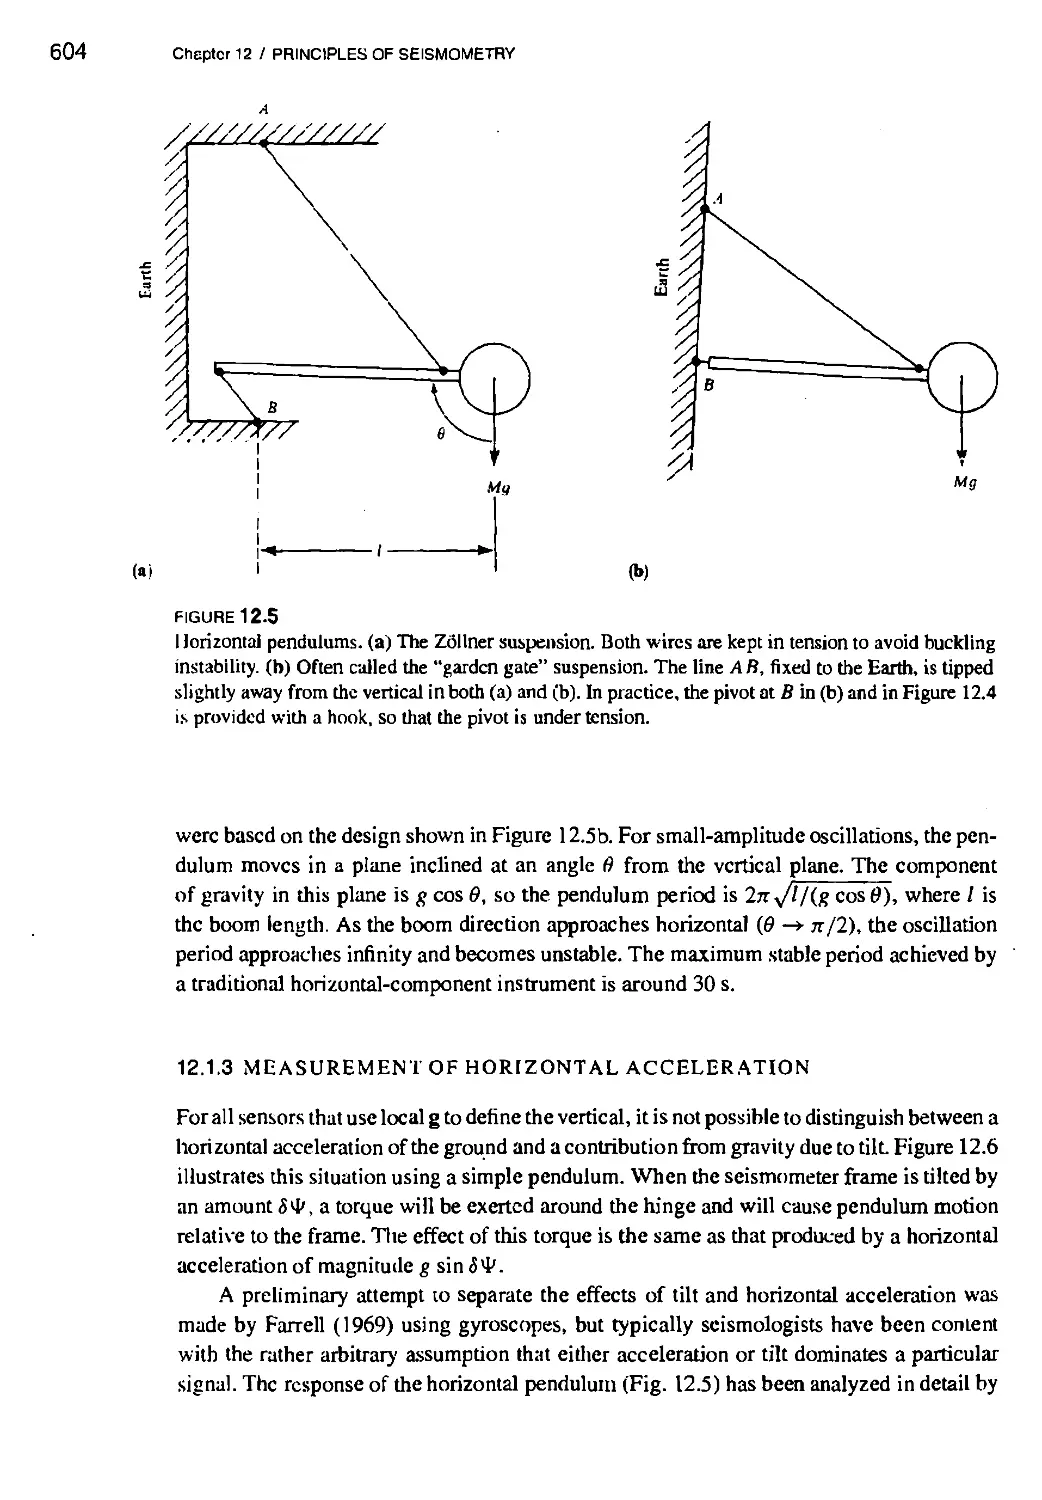 12.1.3 Measurement of horizontal acceleration